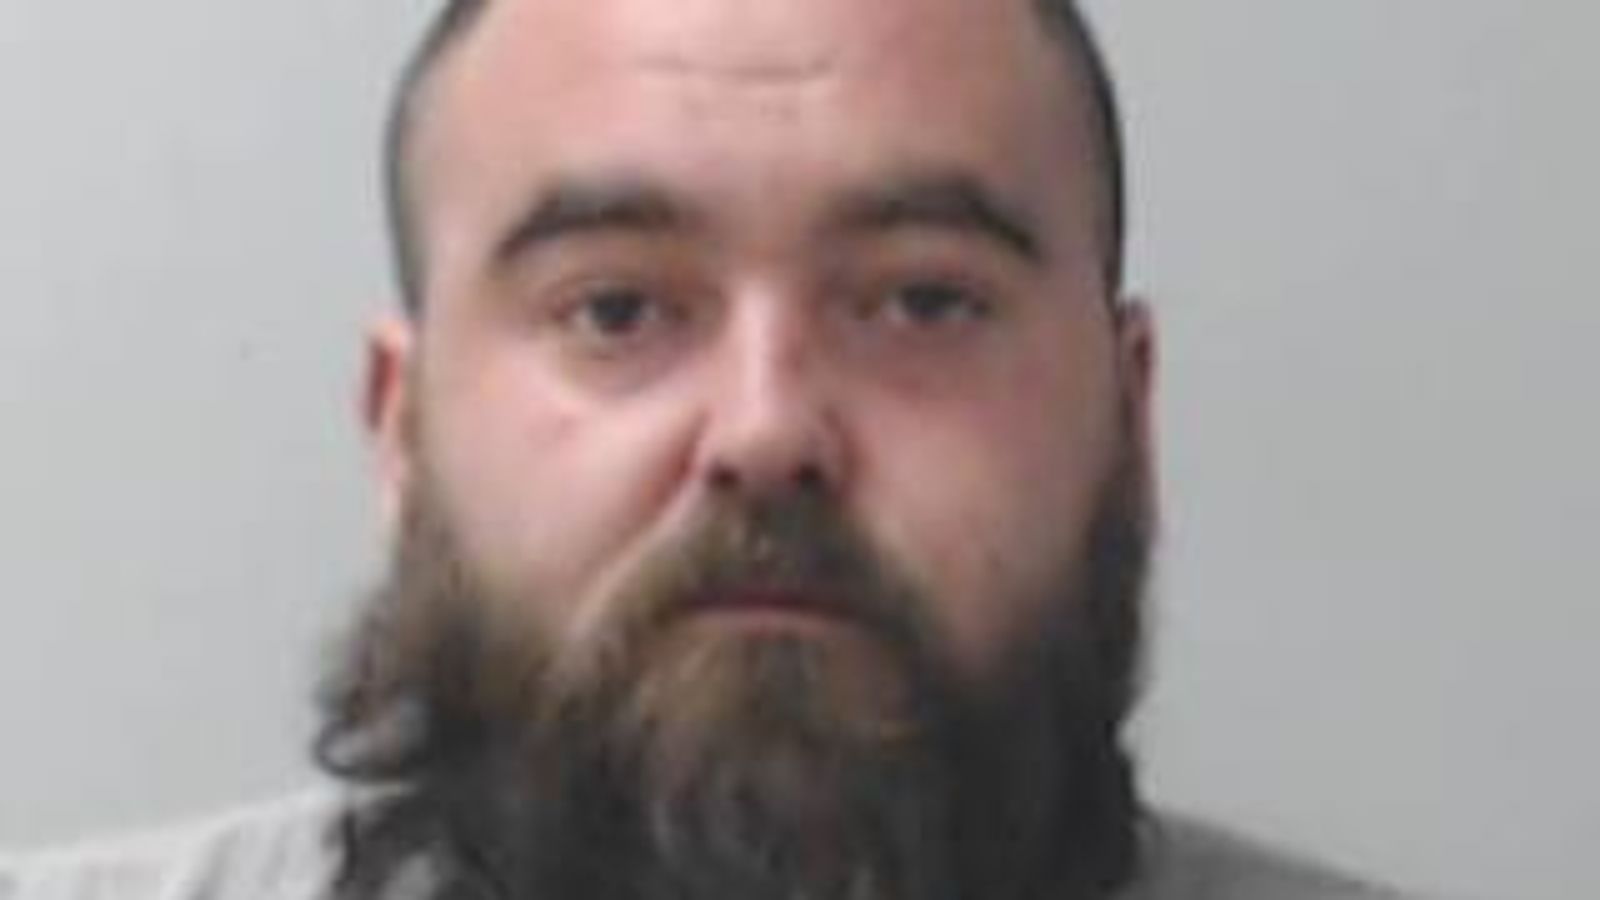 Aberdeen rapist Kyle Allan jailed after subjecting woman to 'night of terror'